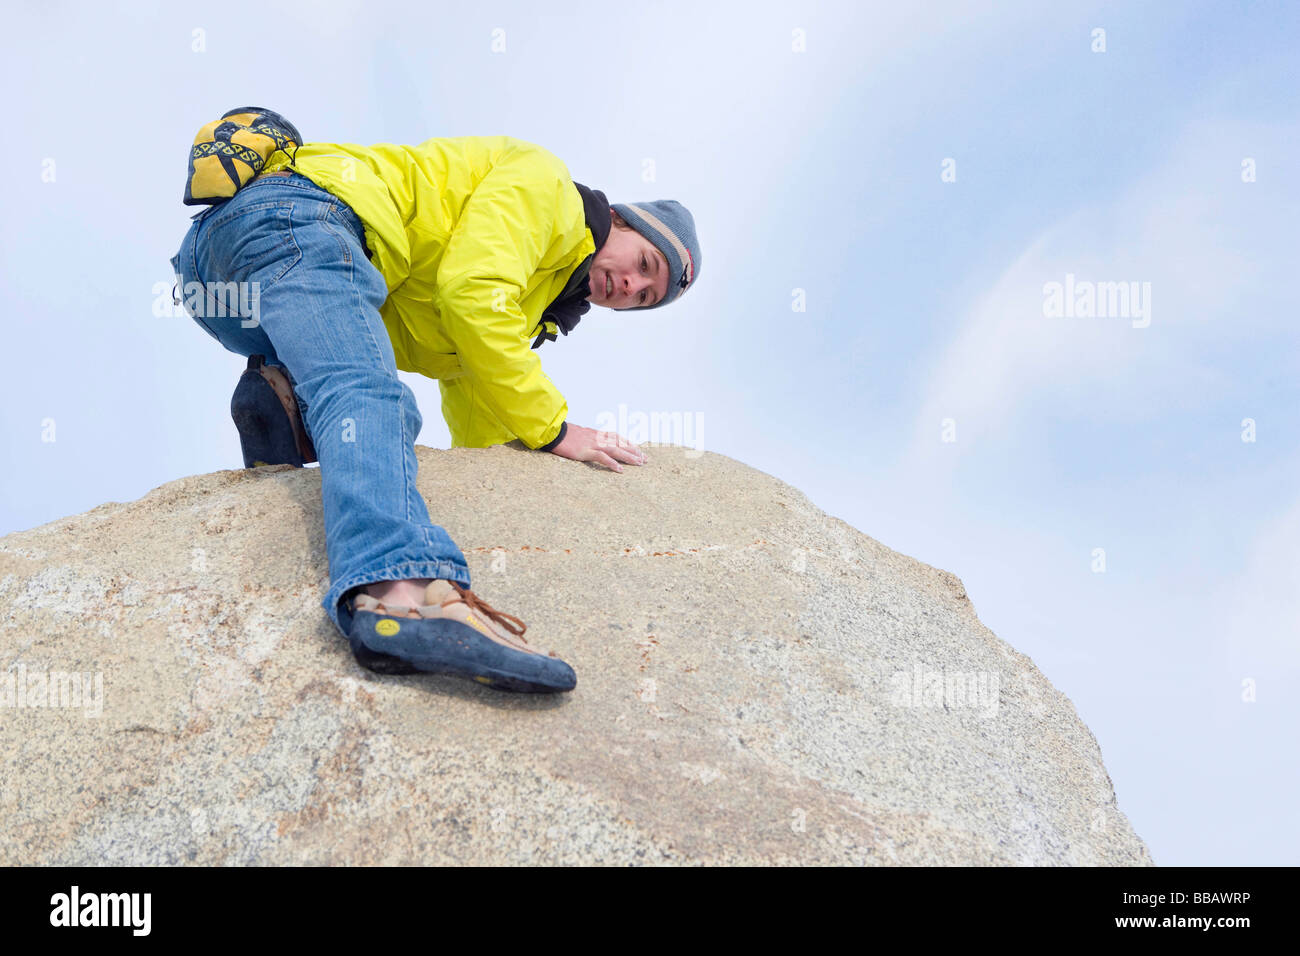 Free climber boulder discendente Foto Stock